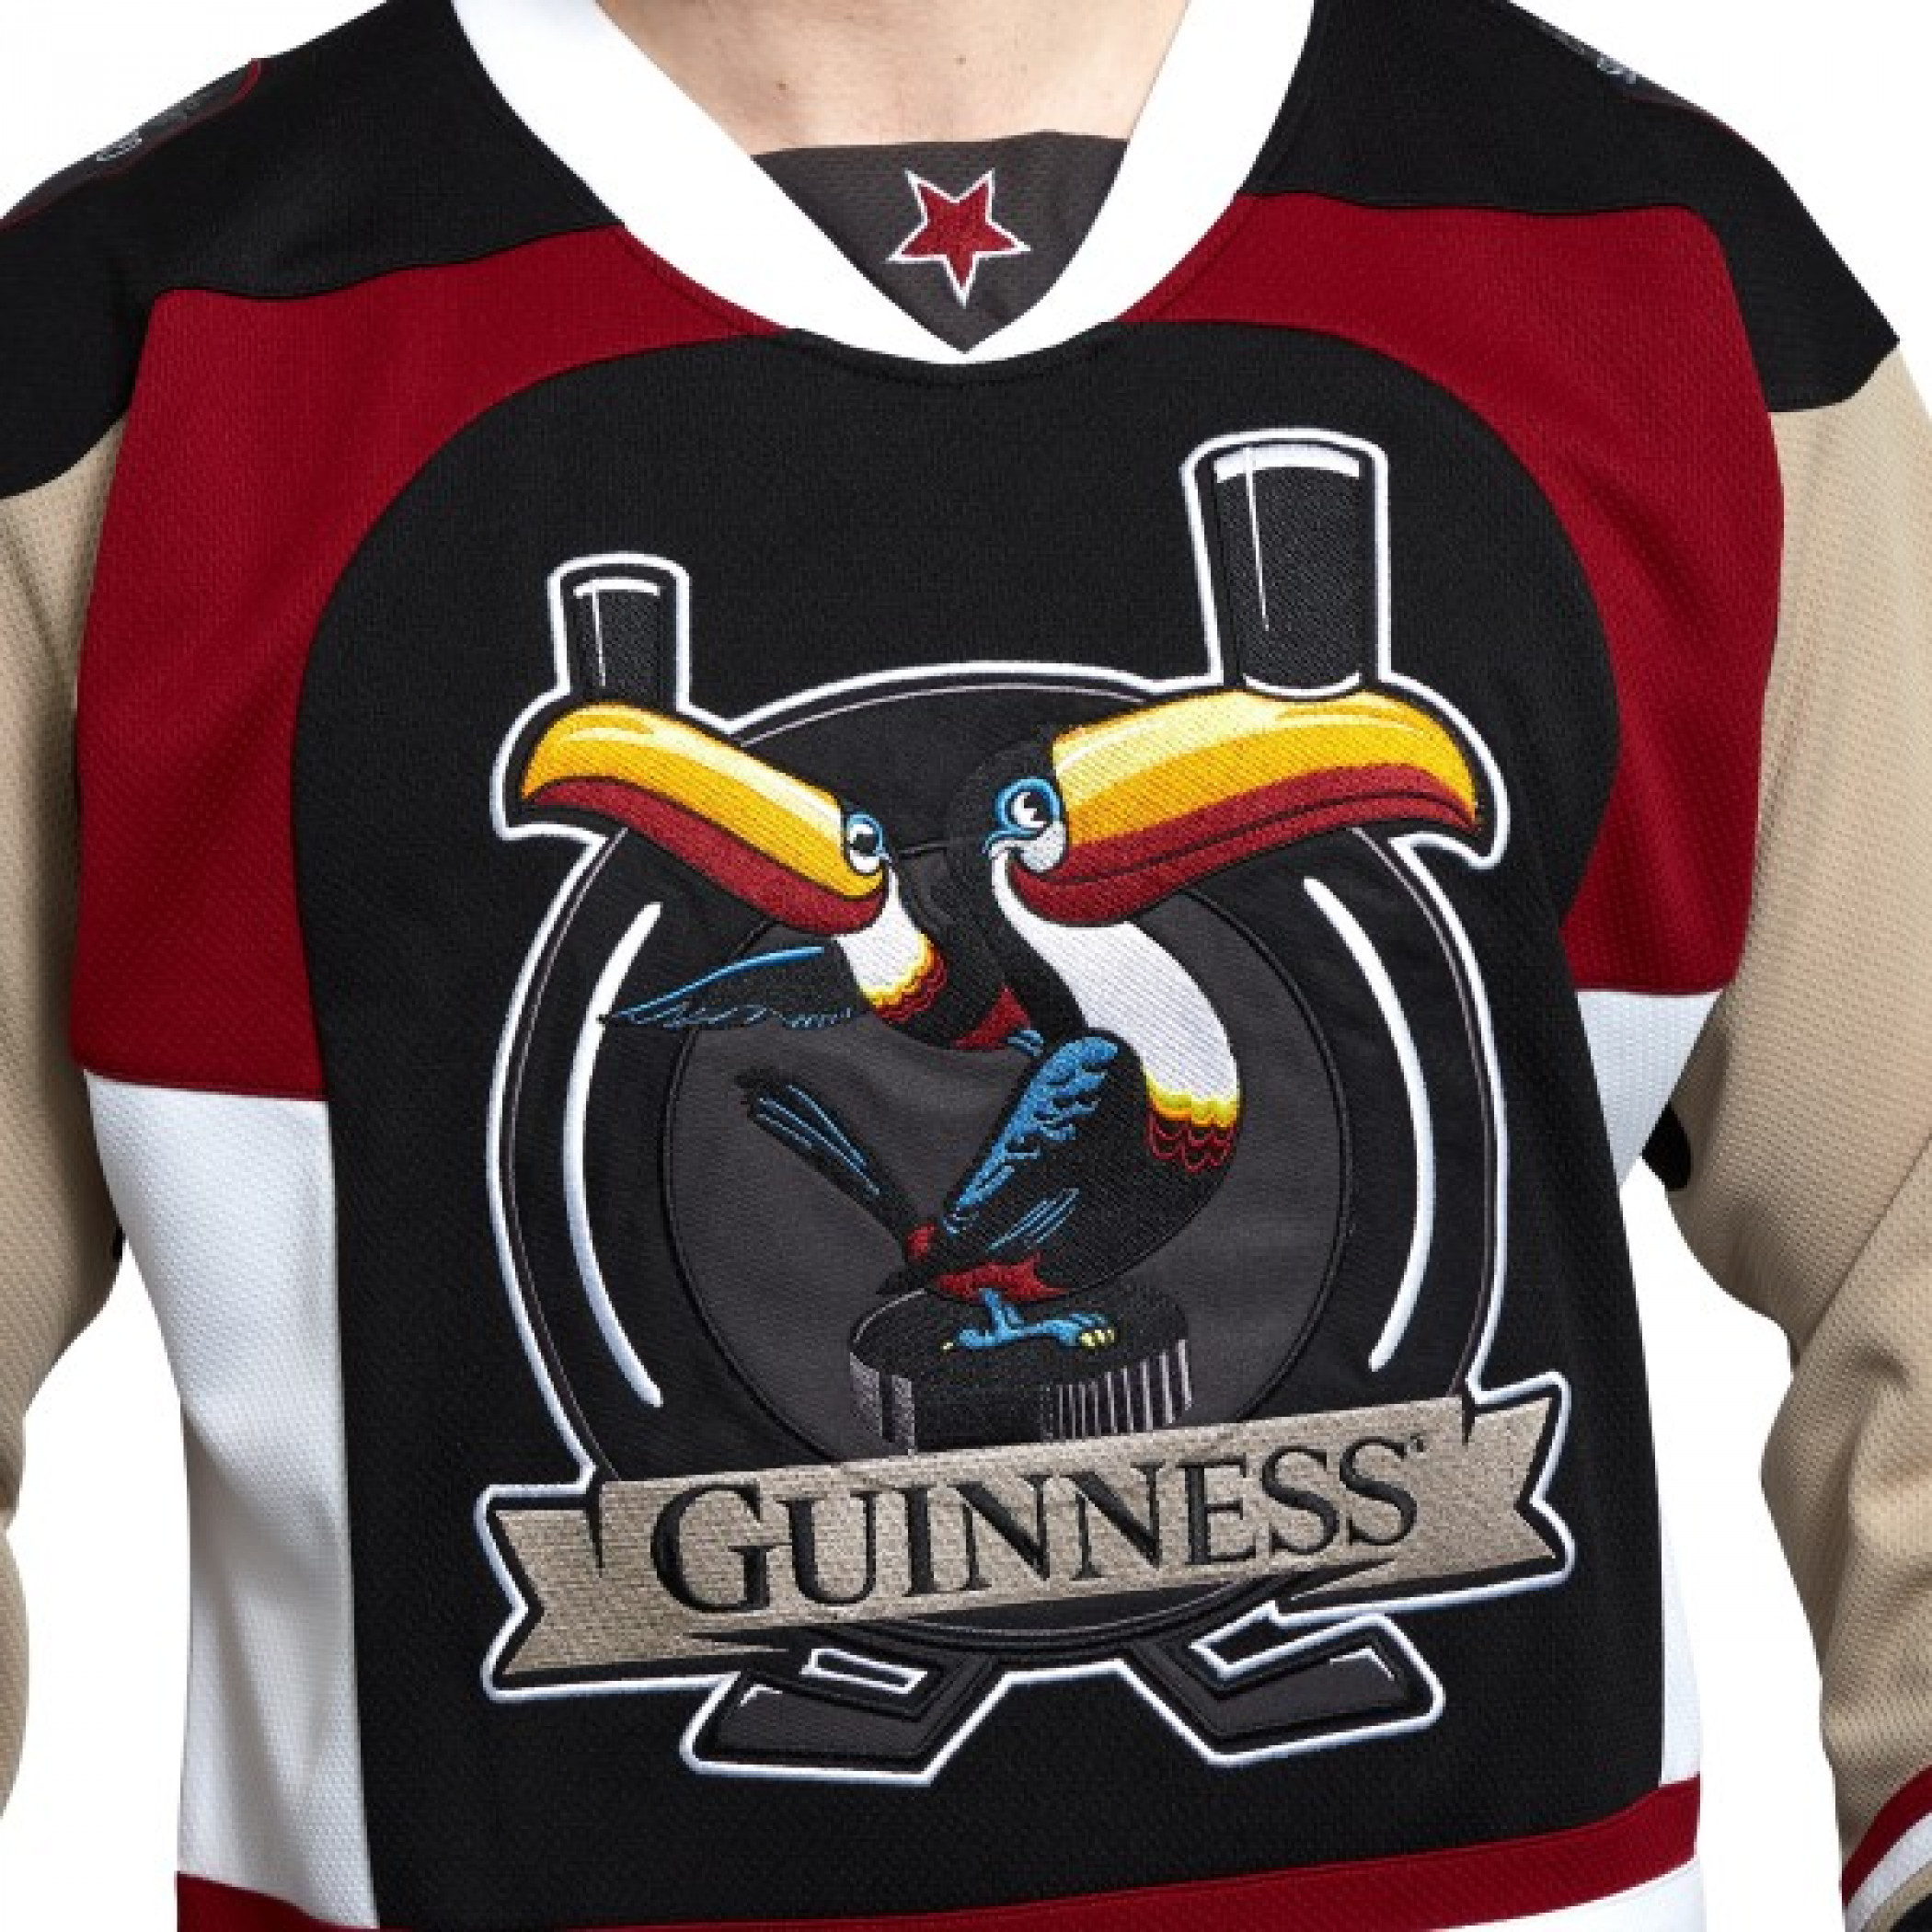 Guinness Toucan Burgundy Hockey Jersey